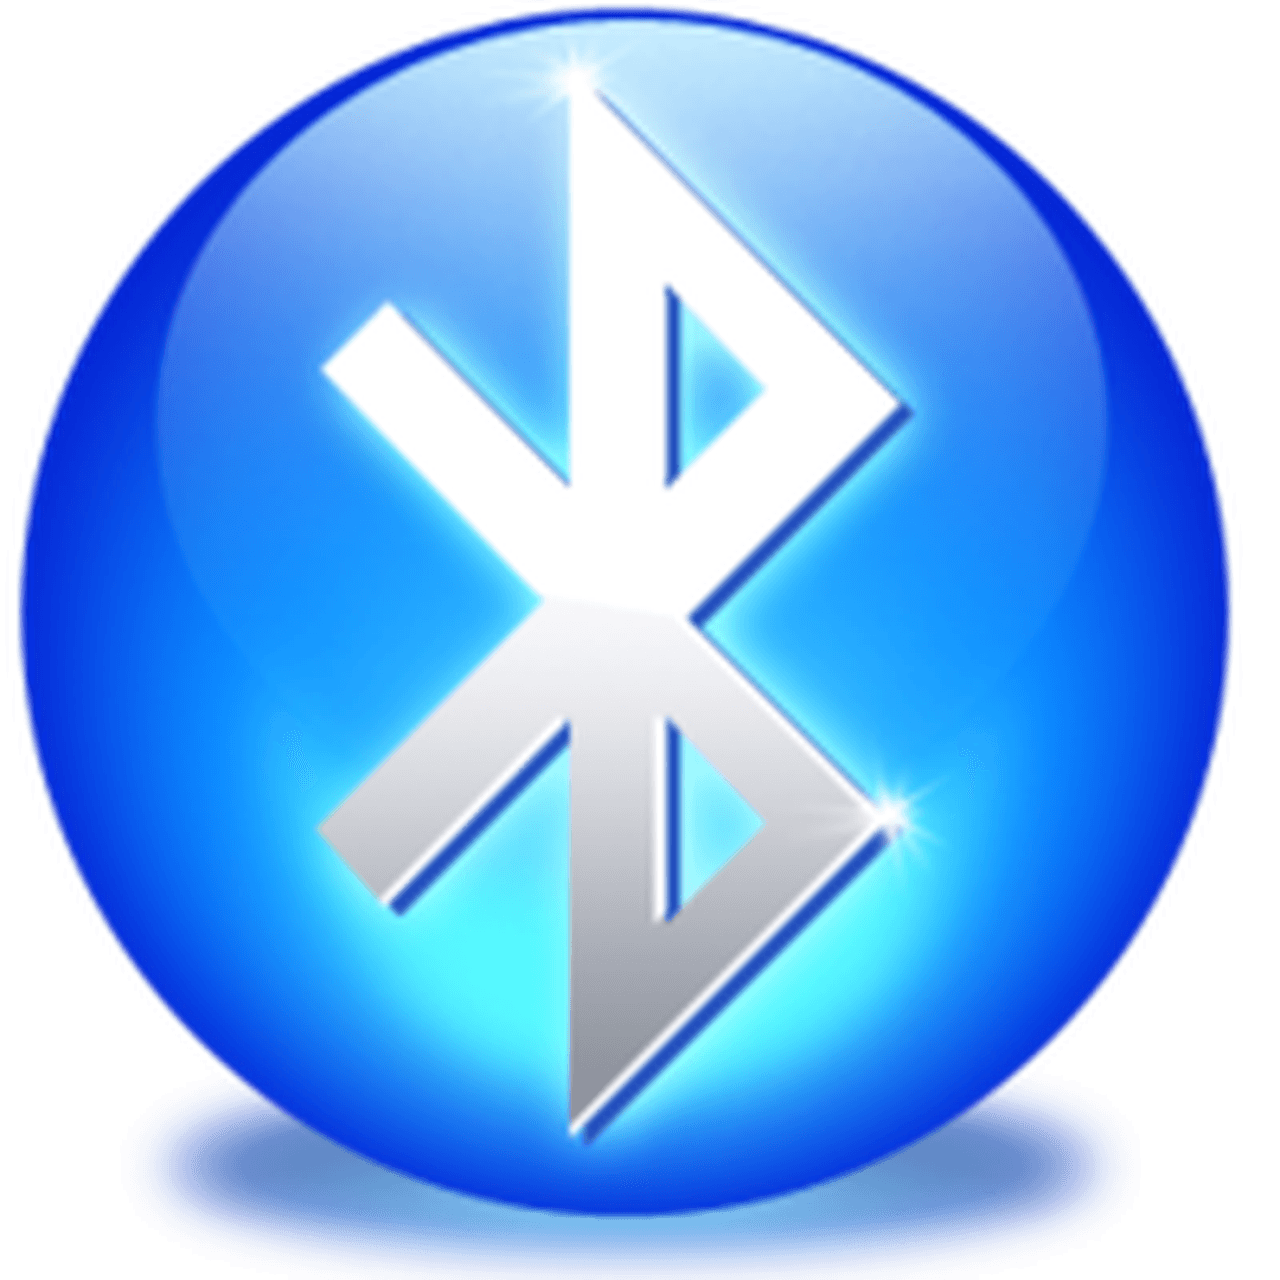 Bluetooth Logo - Bluetooth logo PNG images free download